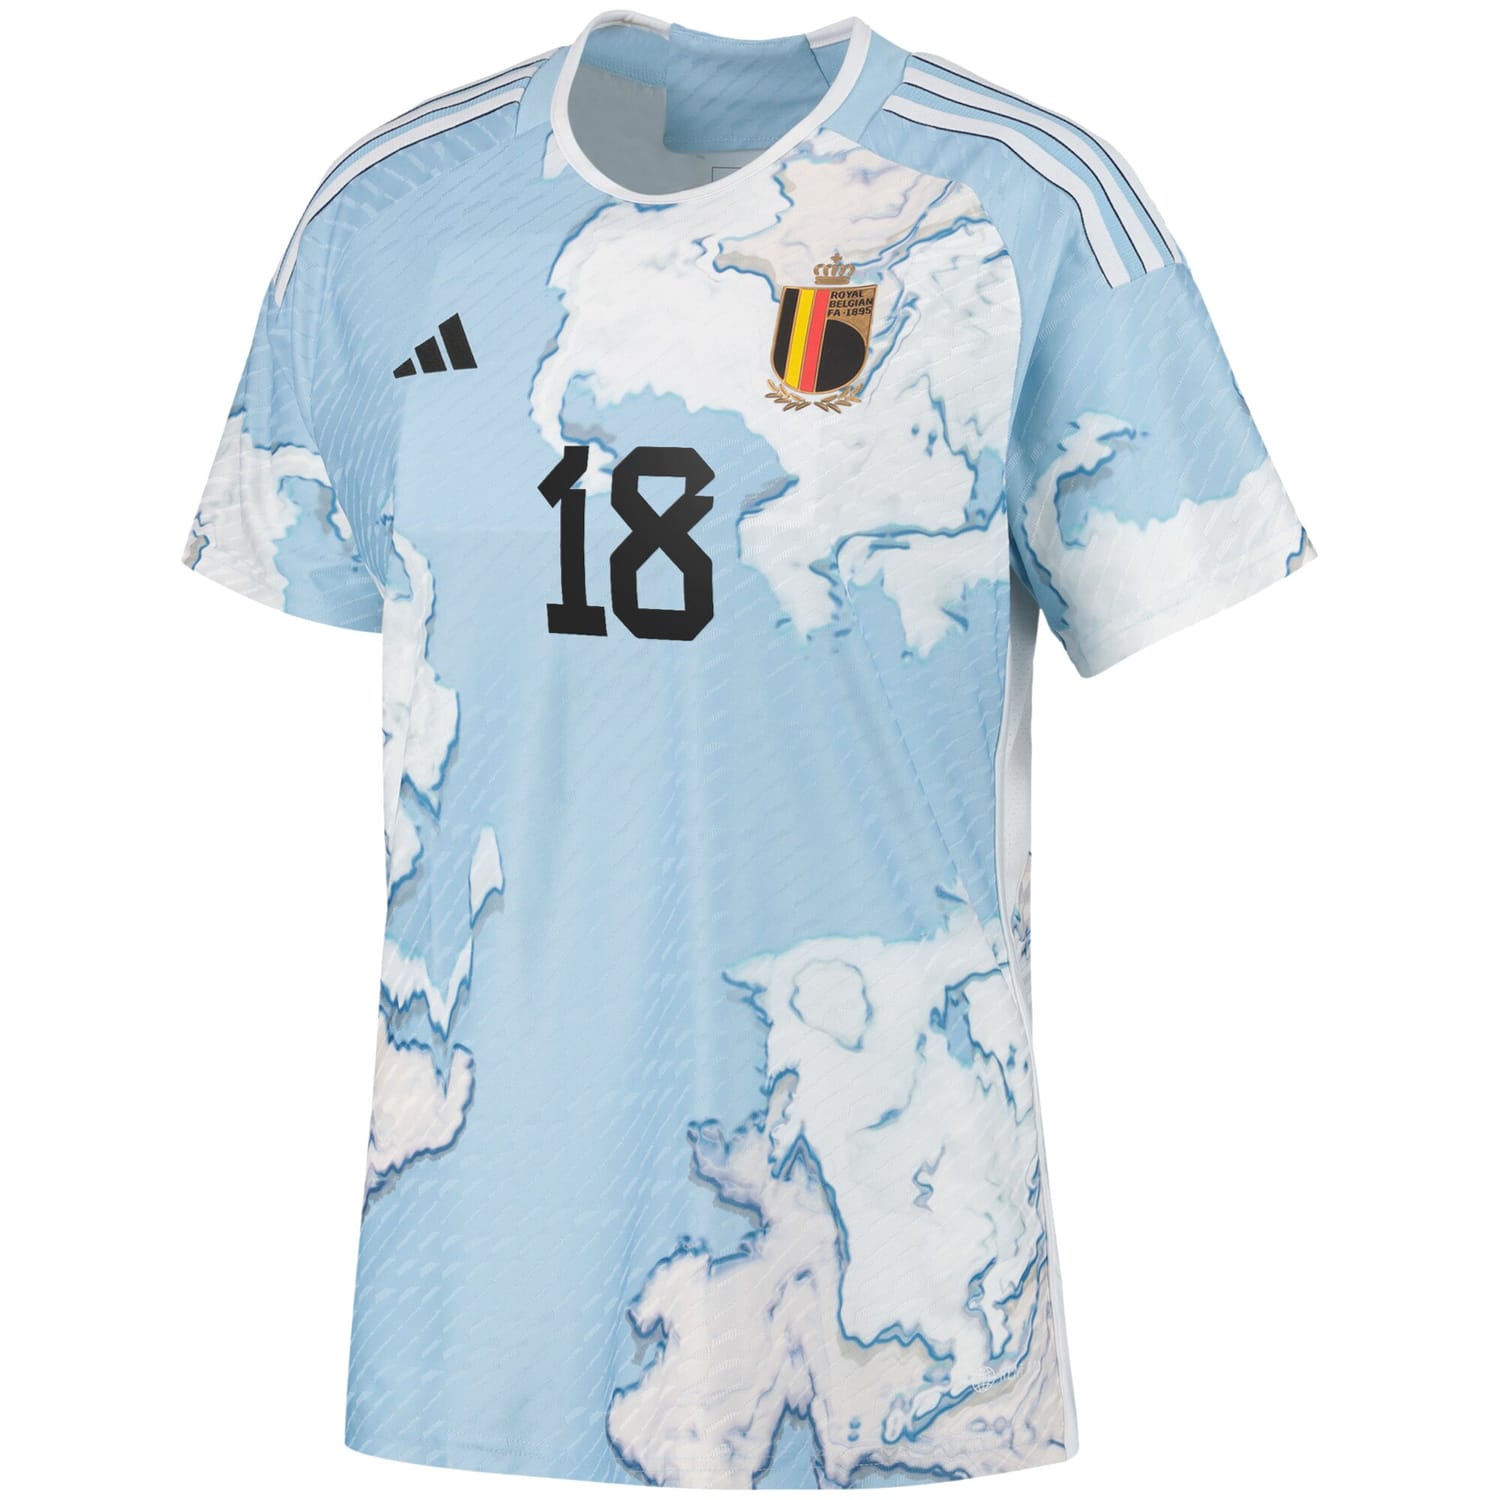 Belgium National Team Away Authentic Jersey Shirt 2023 player Fran Meersman 18 printing for Women